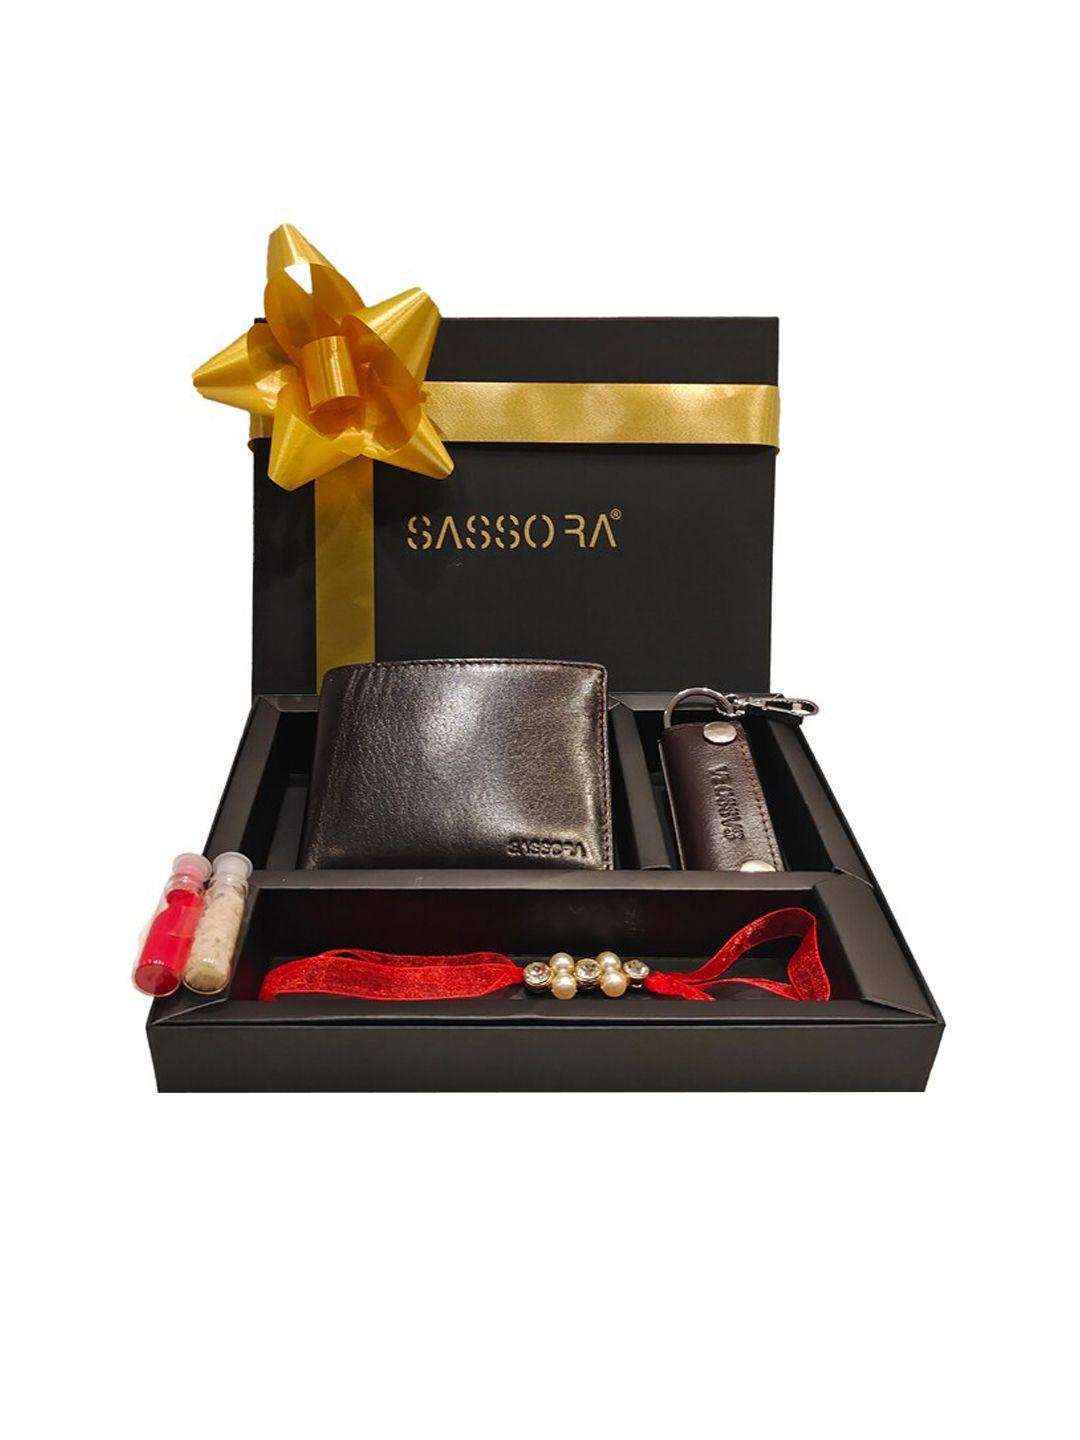 sassora men genuine leather wallet, keychain and rakhi combo accessory gift set